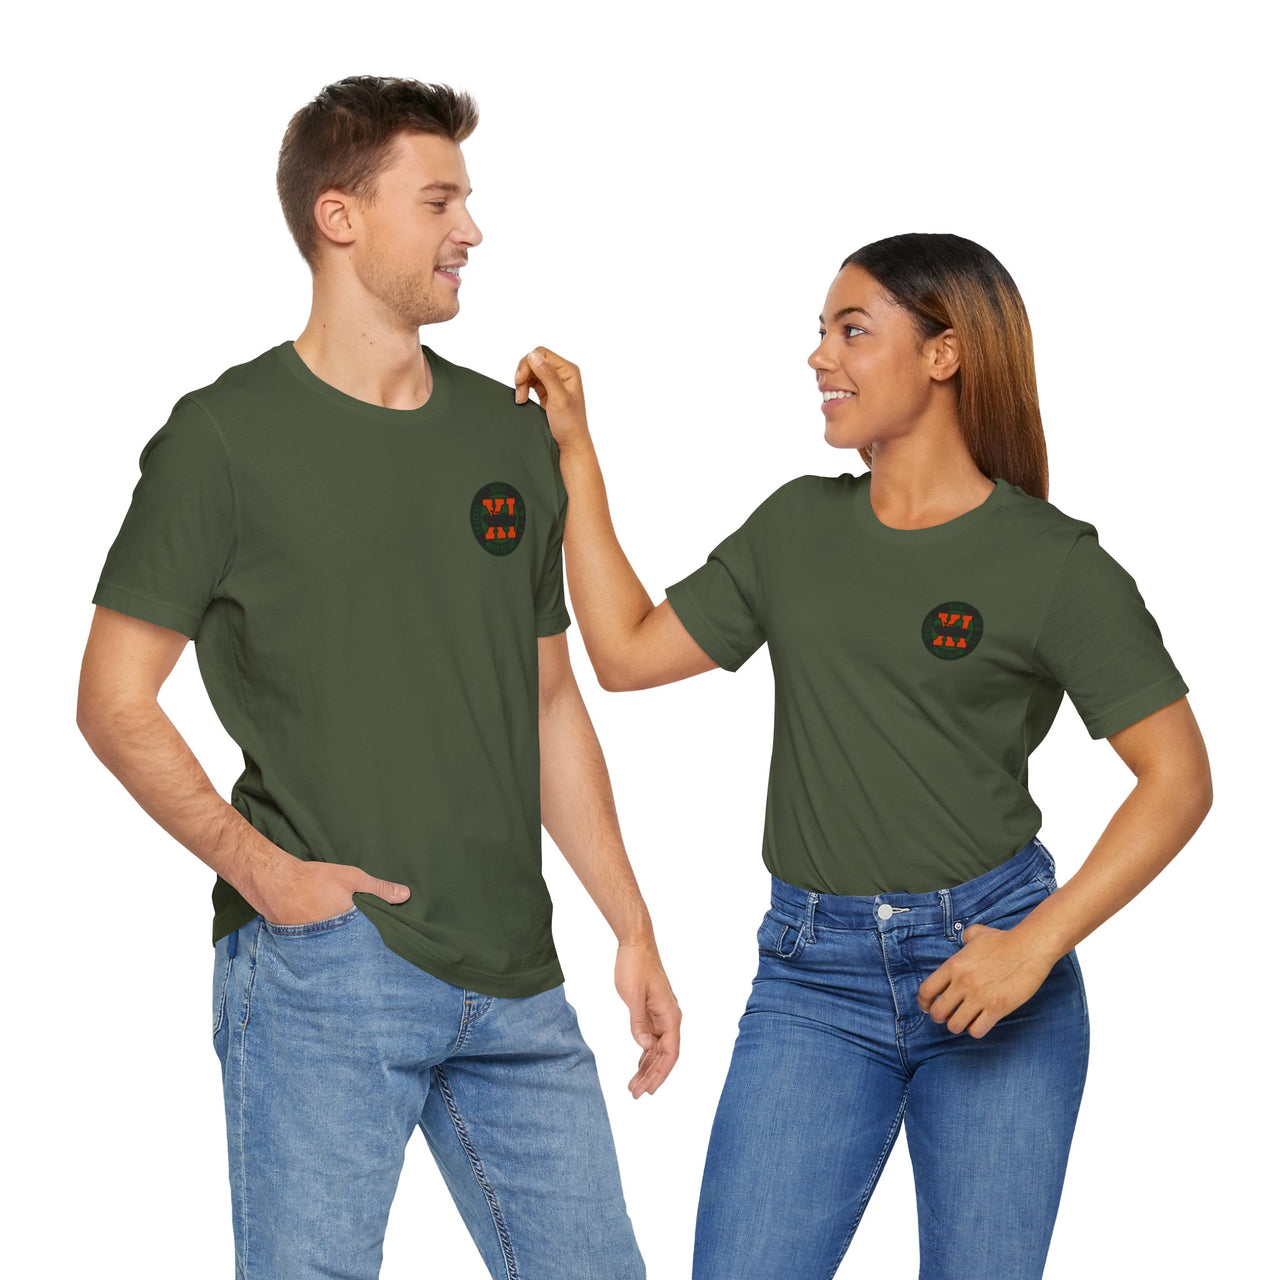 SBU 11 Elite T-Shirt – Honor and Comfort Combined, v2